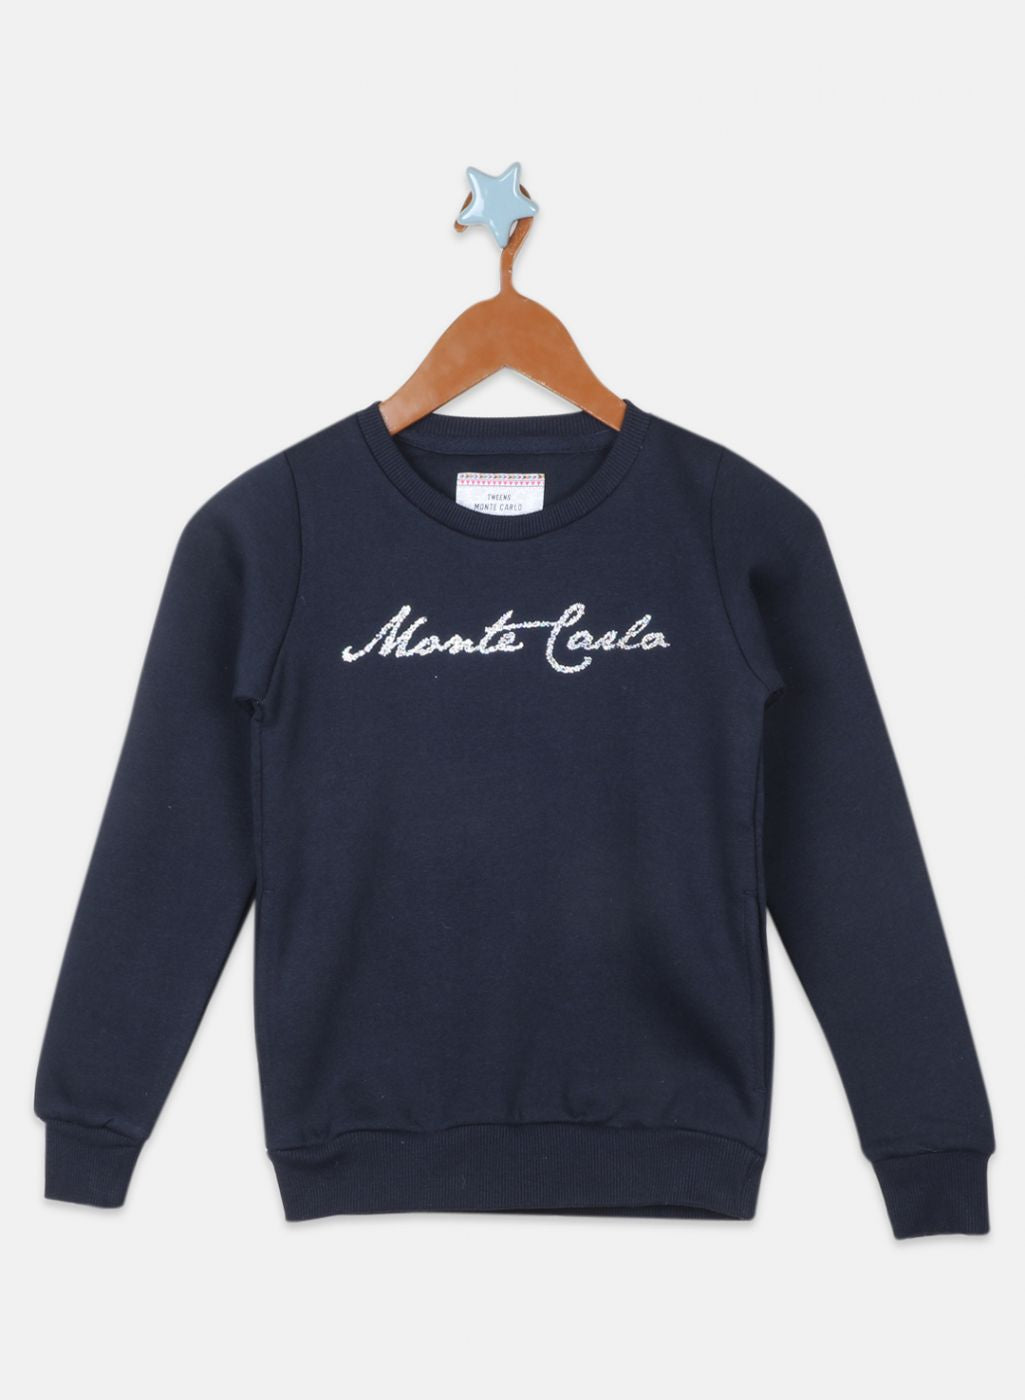 Girls NAvy Blue Printed Sweatshirt